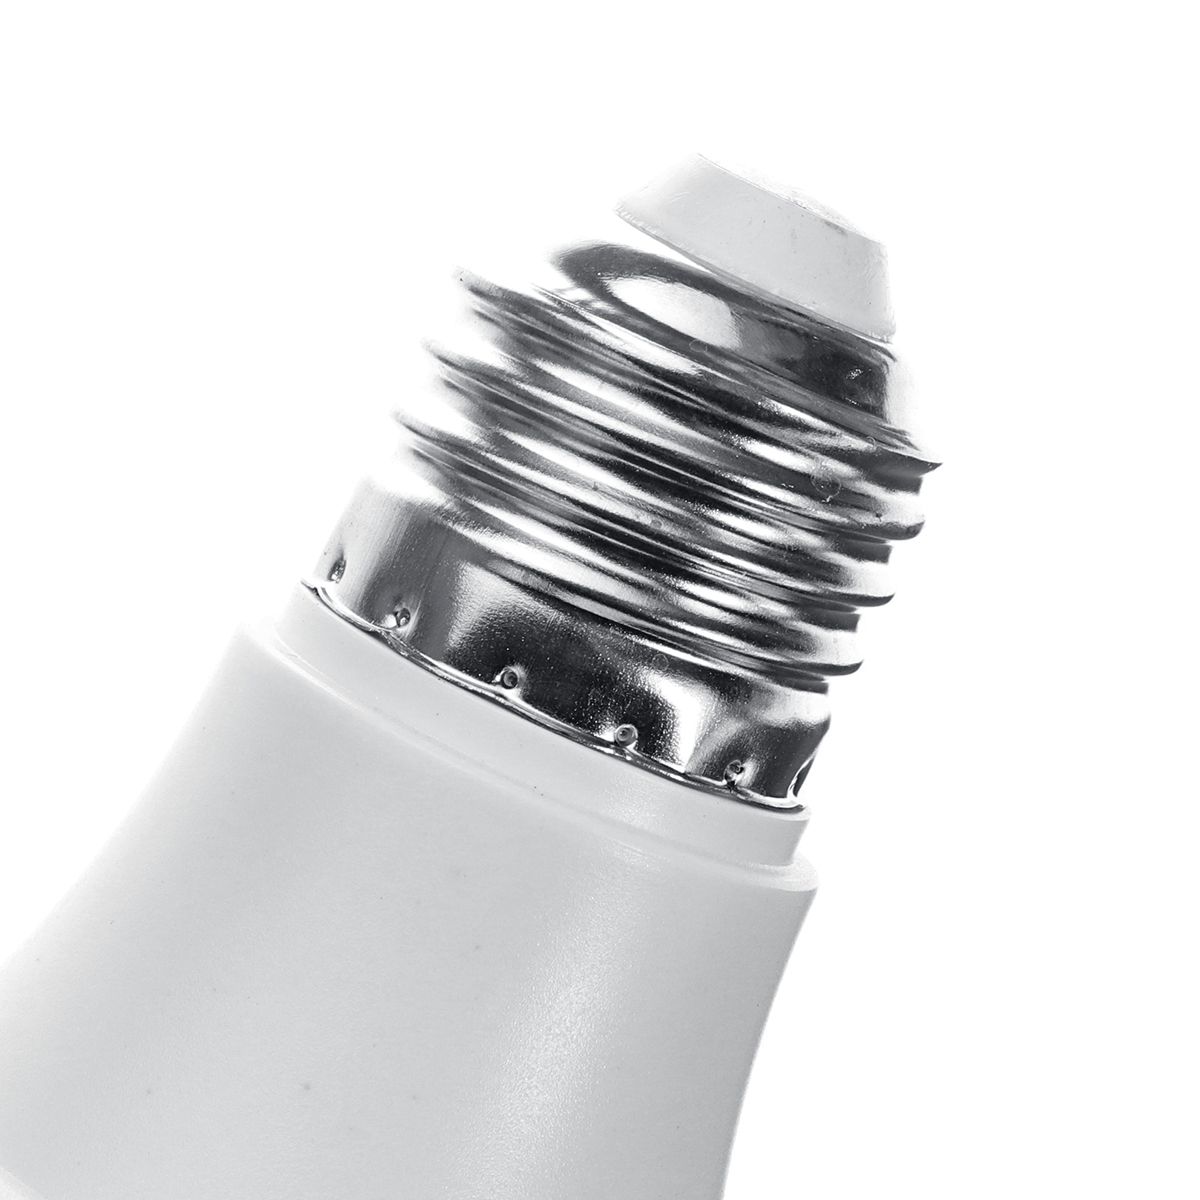 E27-Screw-30W-2-Blades-Folding-LED-Light-Bulb-Home-Pendant-Garage-Lamp-Decor-AC95-265V-1622626